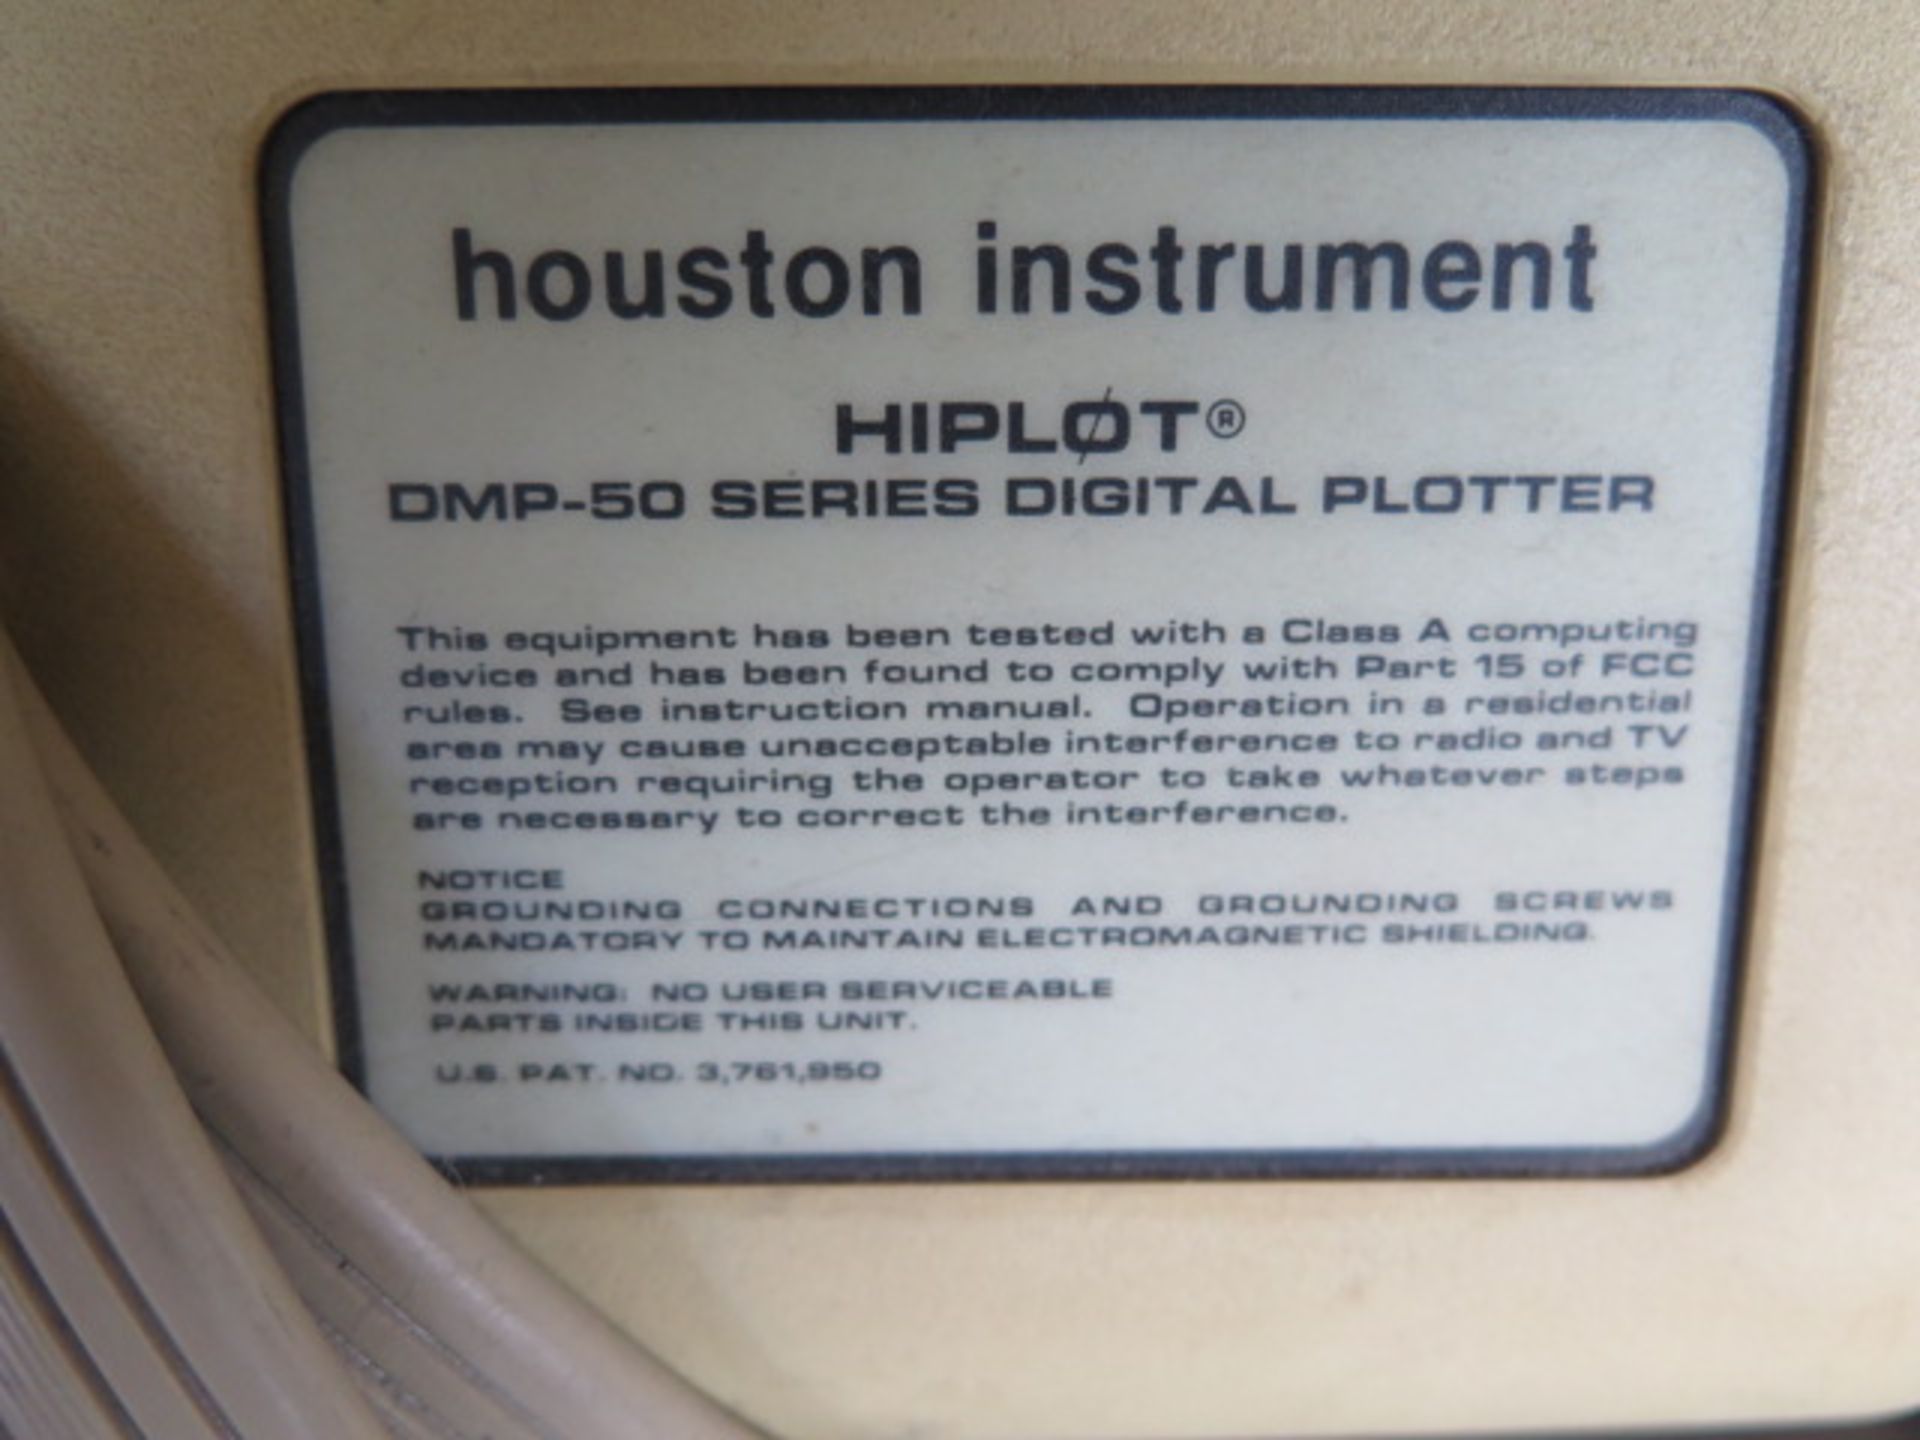 Houston Instrument "Hiplot" DMP-50 Plotter (SOLD AS-IS - NO WARRANTY) - Image 7 of 7